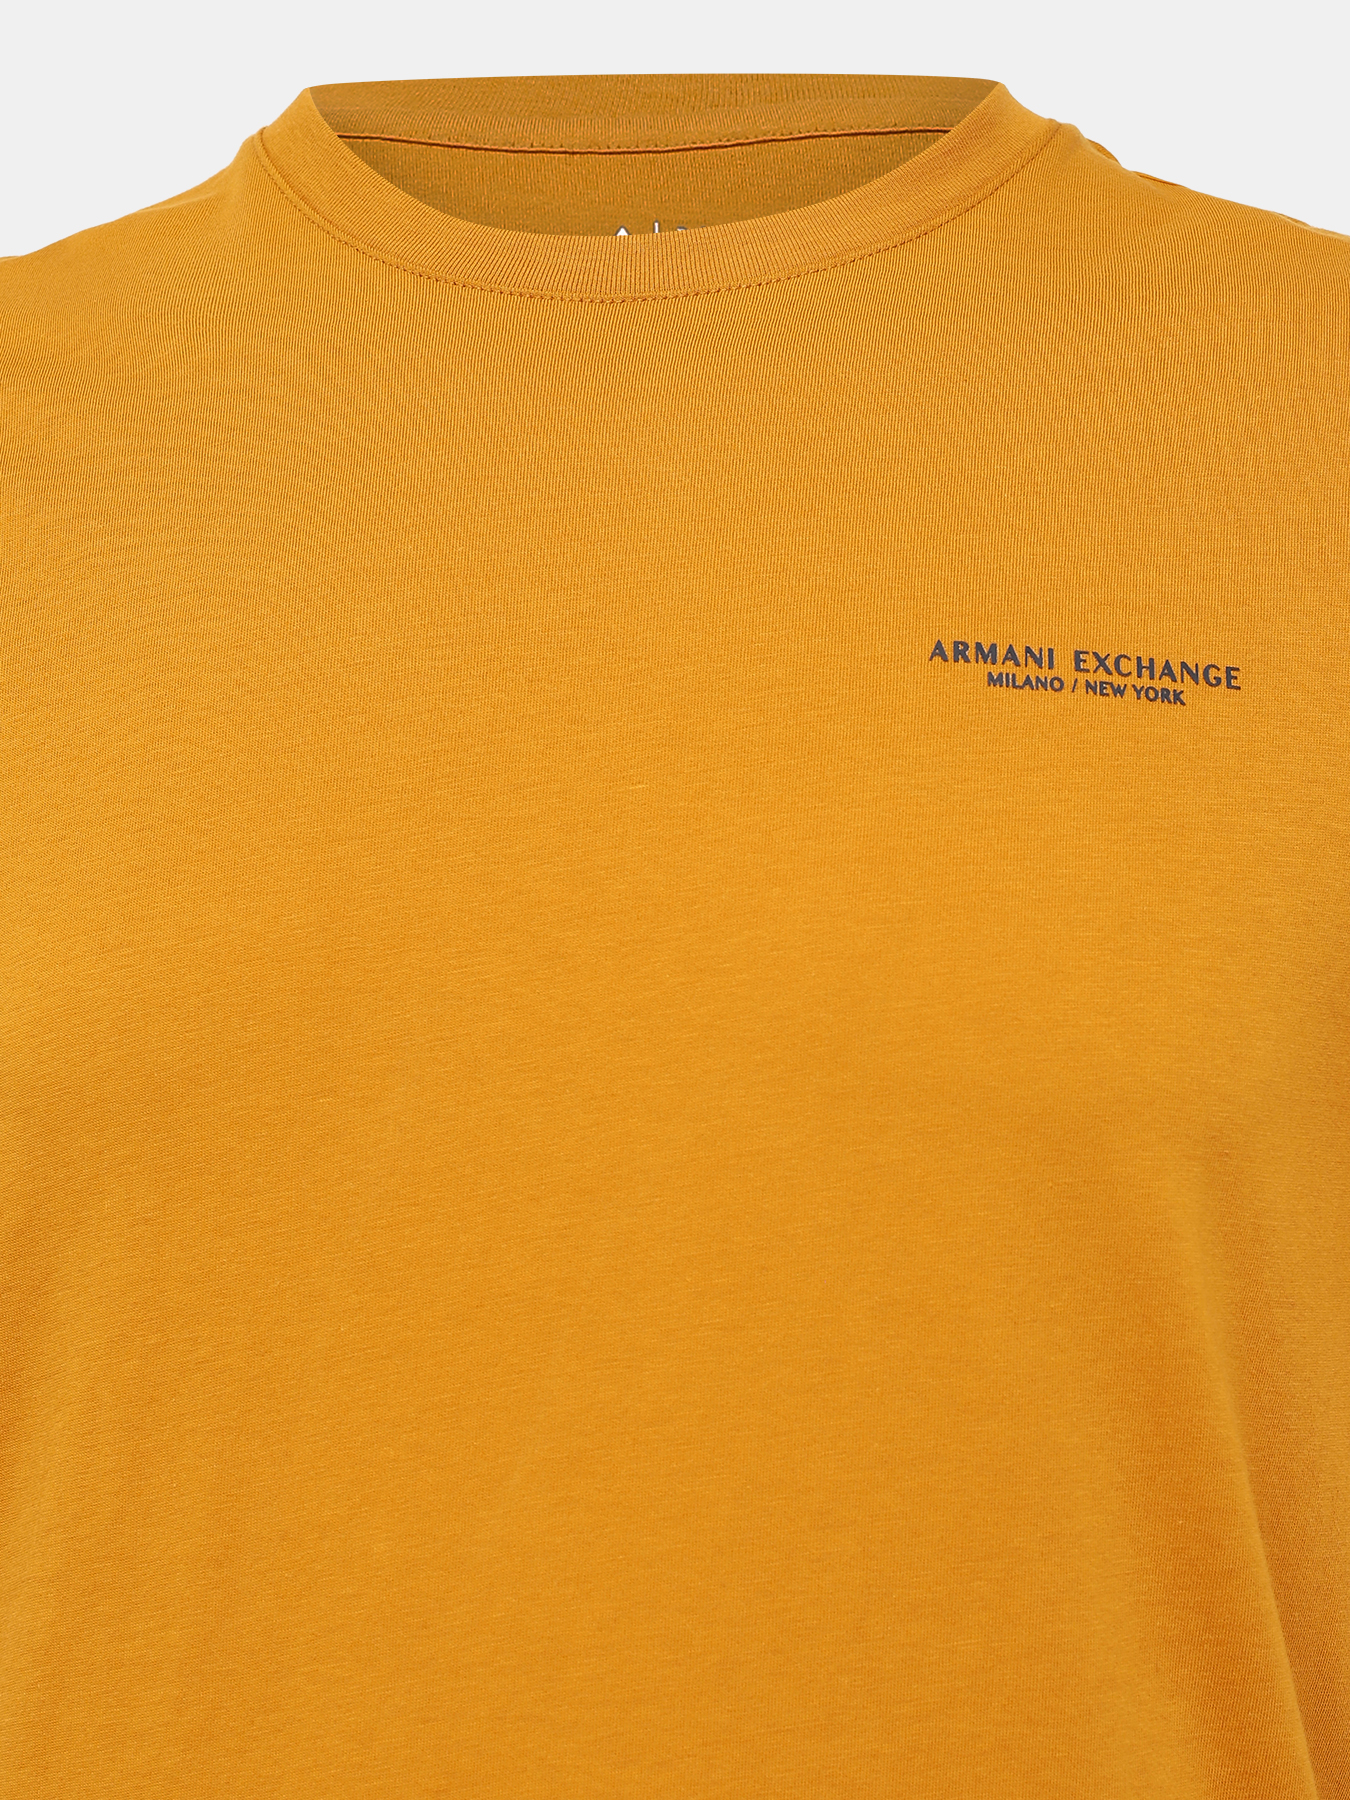 Футболка Armani Exchange 422430-045, цвет горчичный, размер 52-54 - фото 3